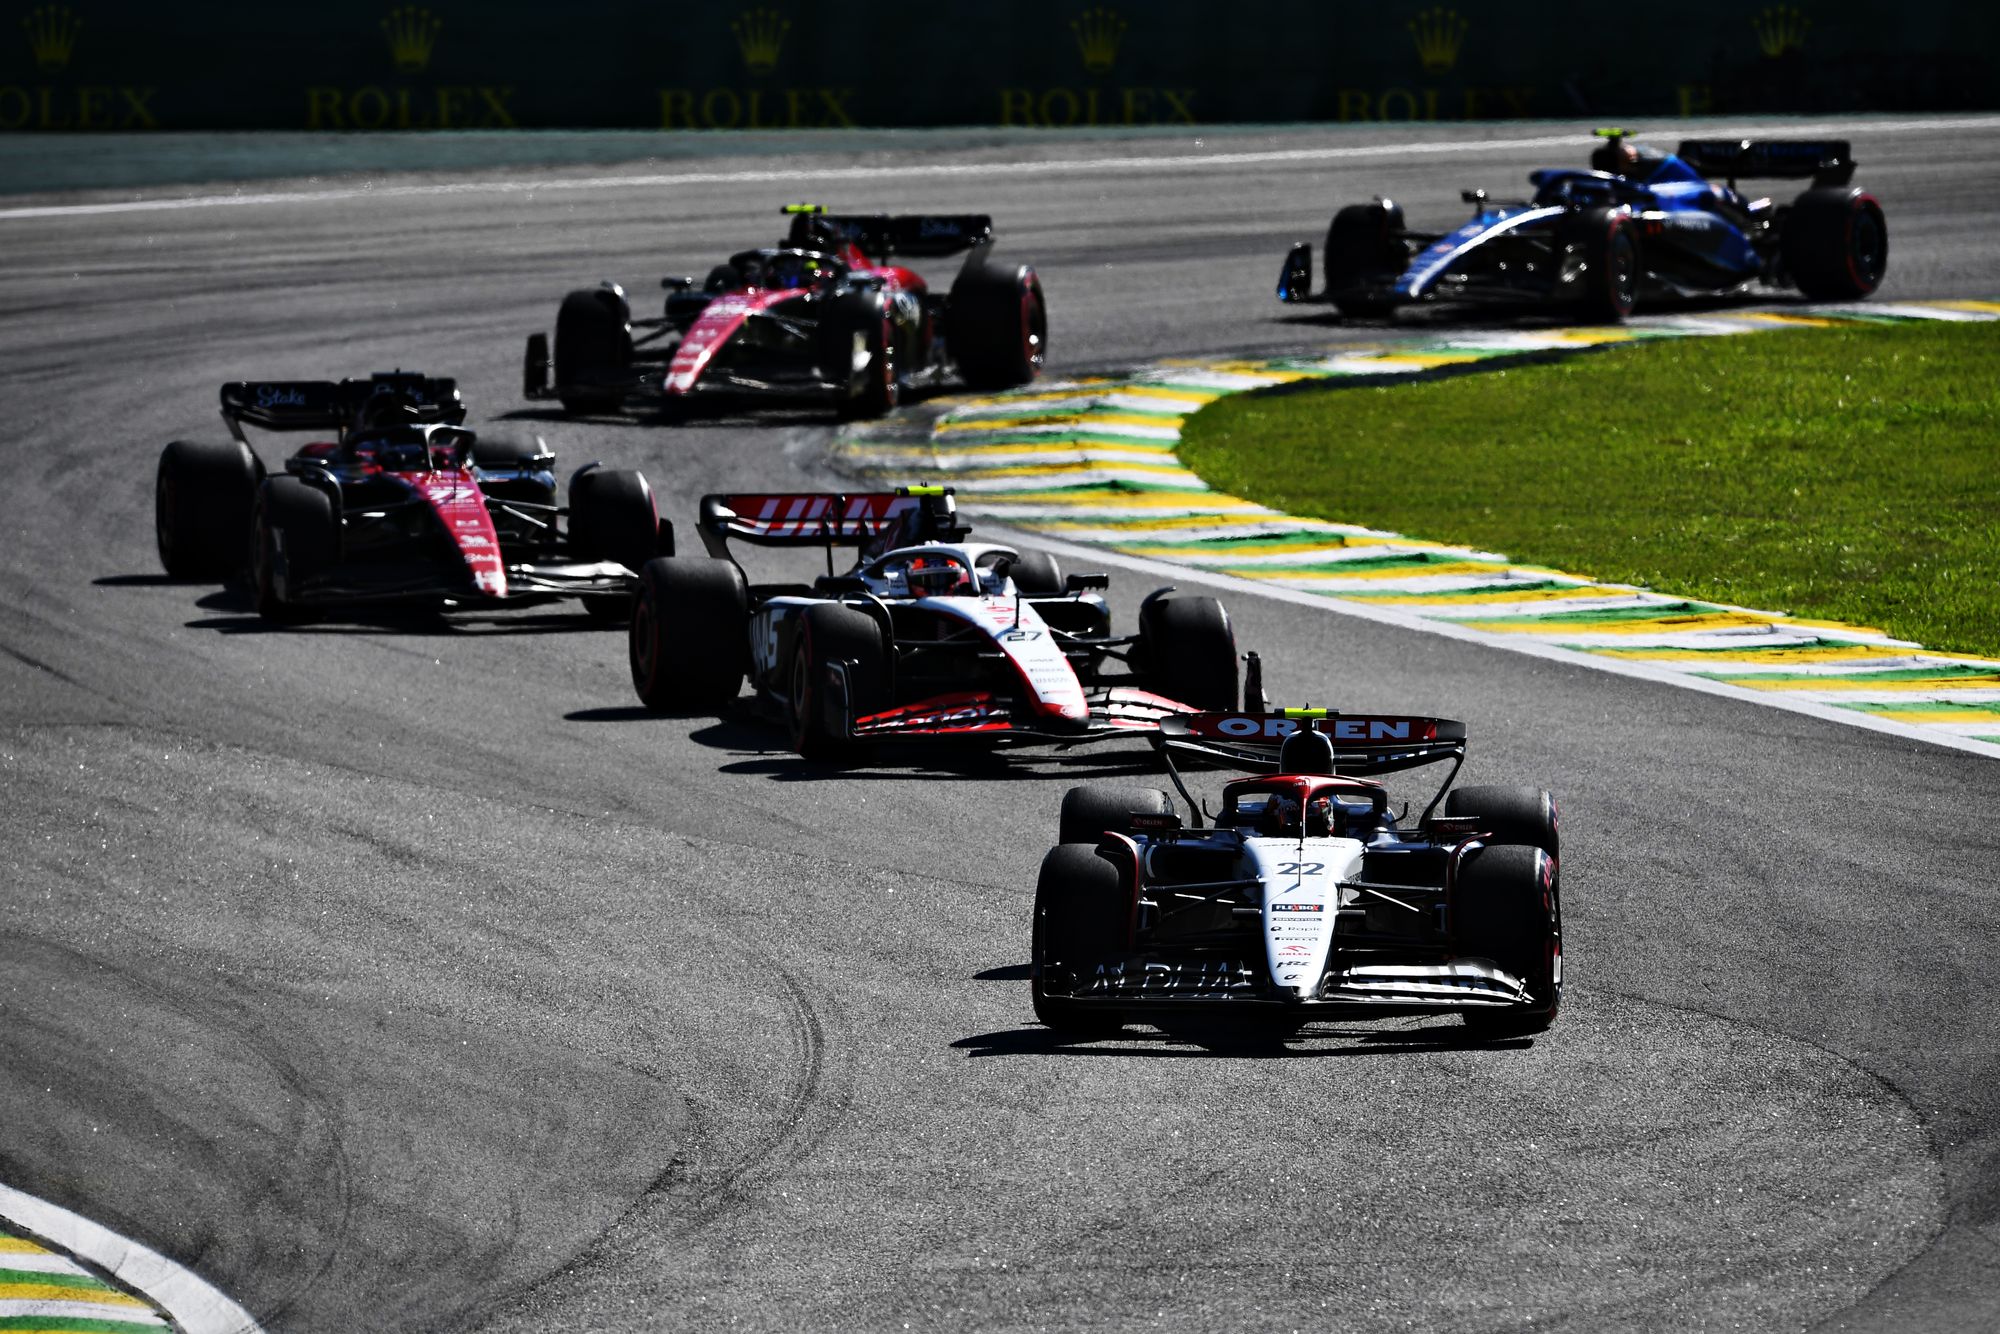 2023 Brazilian Grand Prix Print